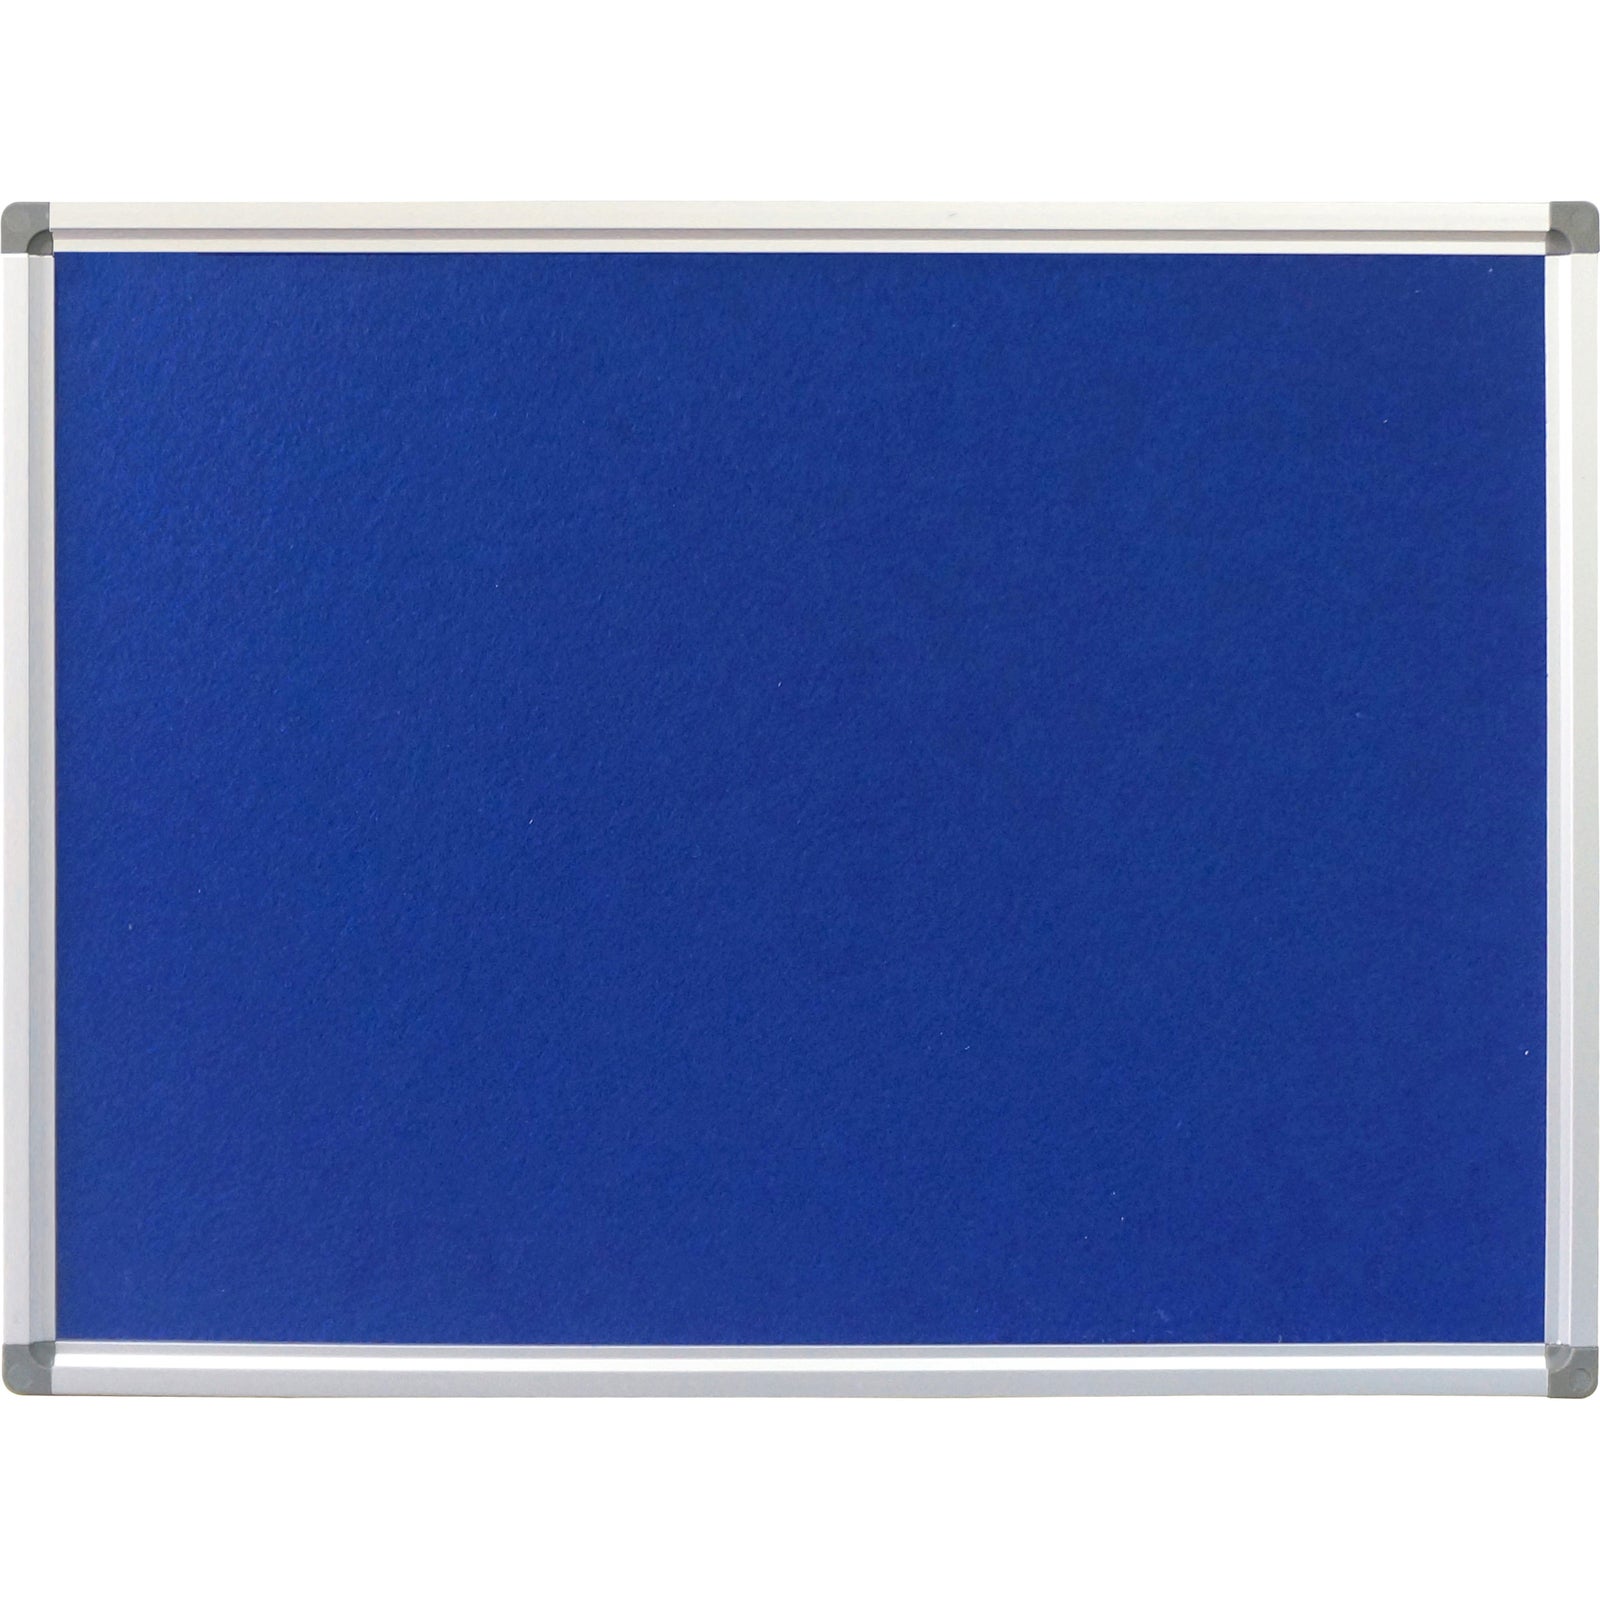 RAPIDLINE PINBOARD W1800mm x D15mm x H1200mm Blue